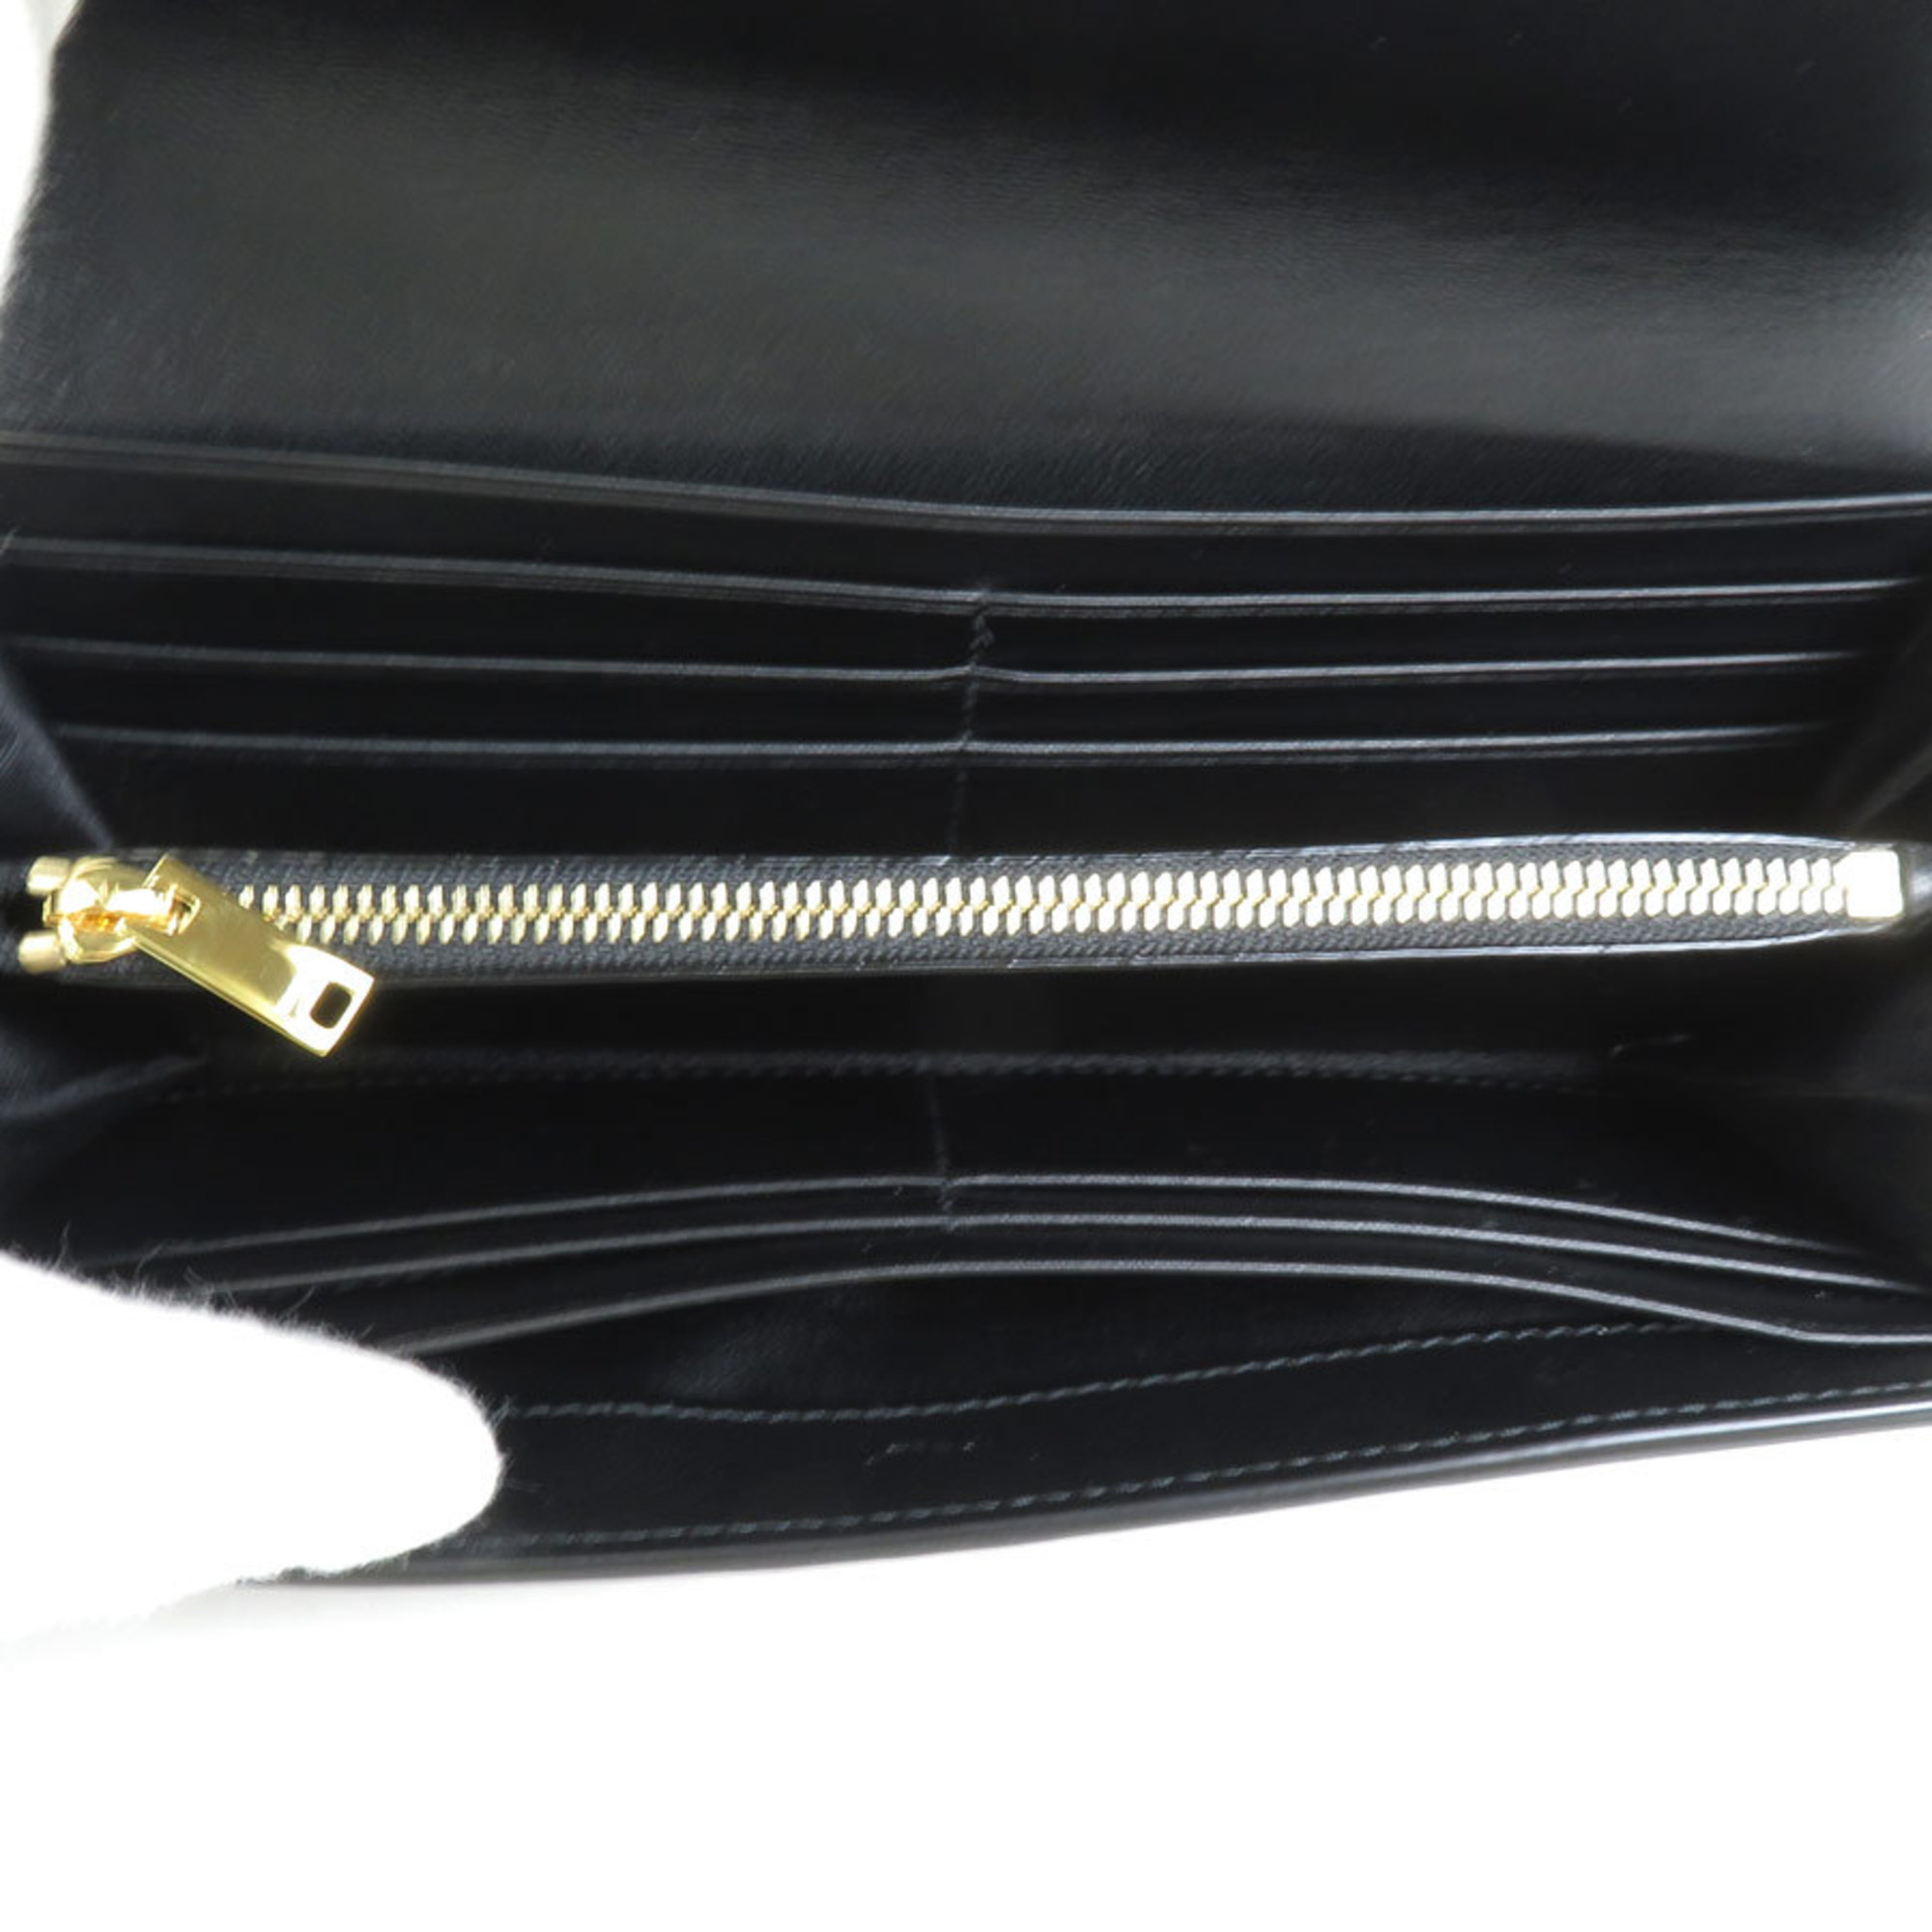 BALLY Long Wallet Leather Black/Burgundy/Off-White Gold Unisex